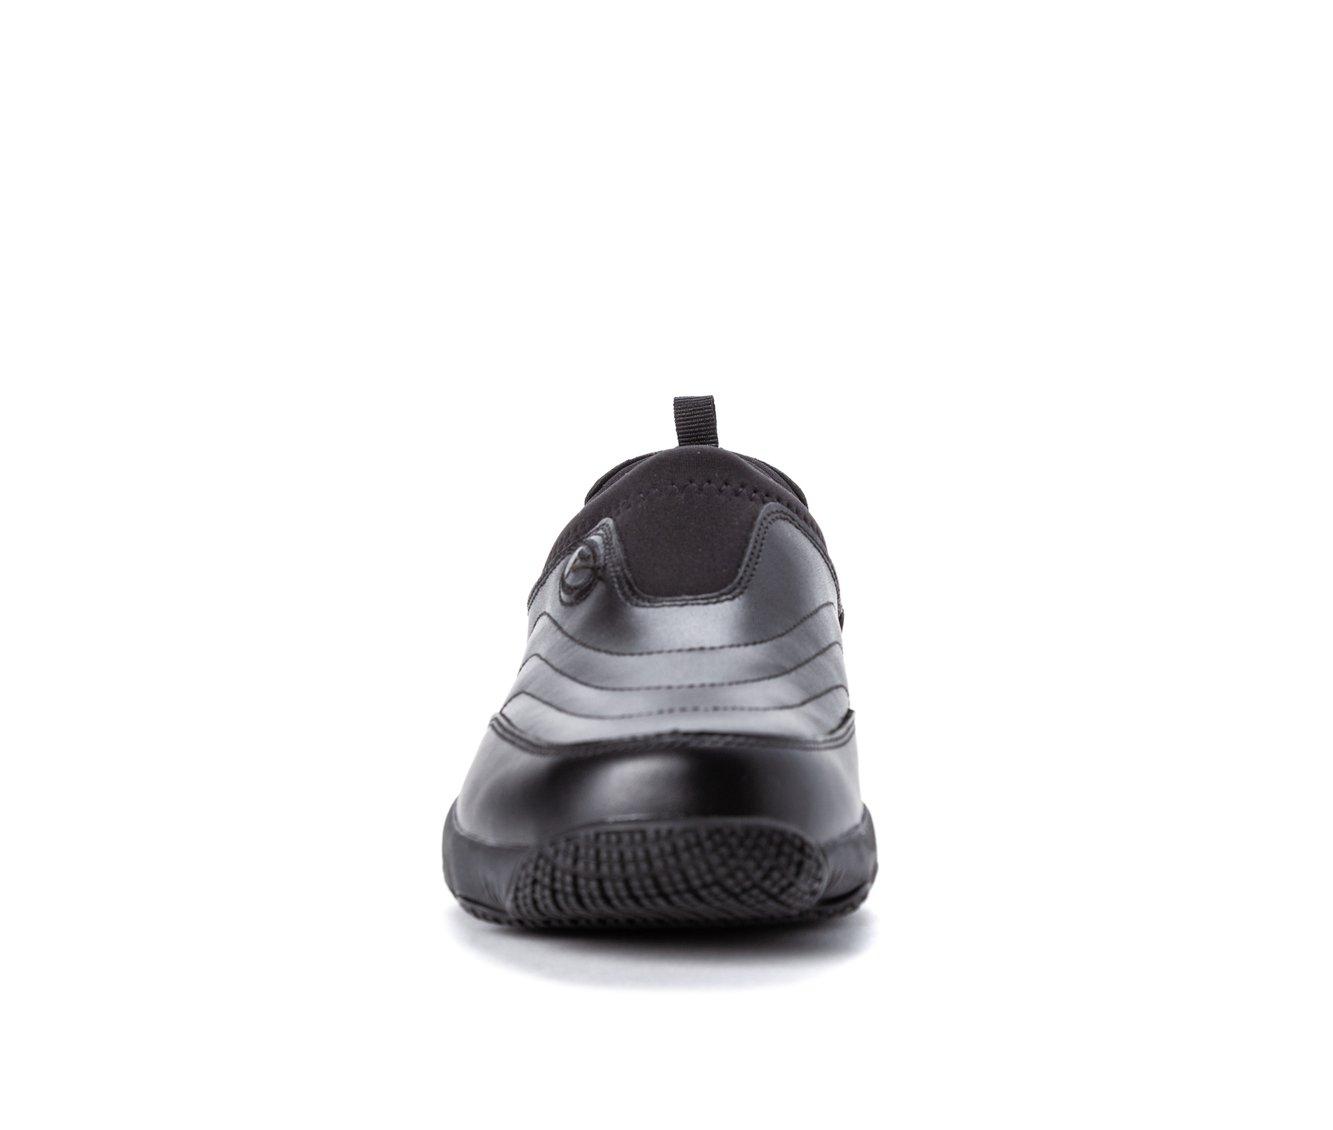 Men's Propet Wash N Wear Slip On II Slip Resistant Shoes